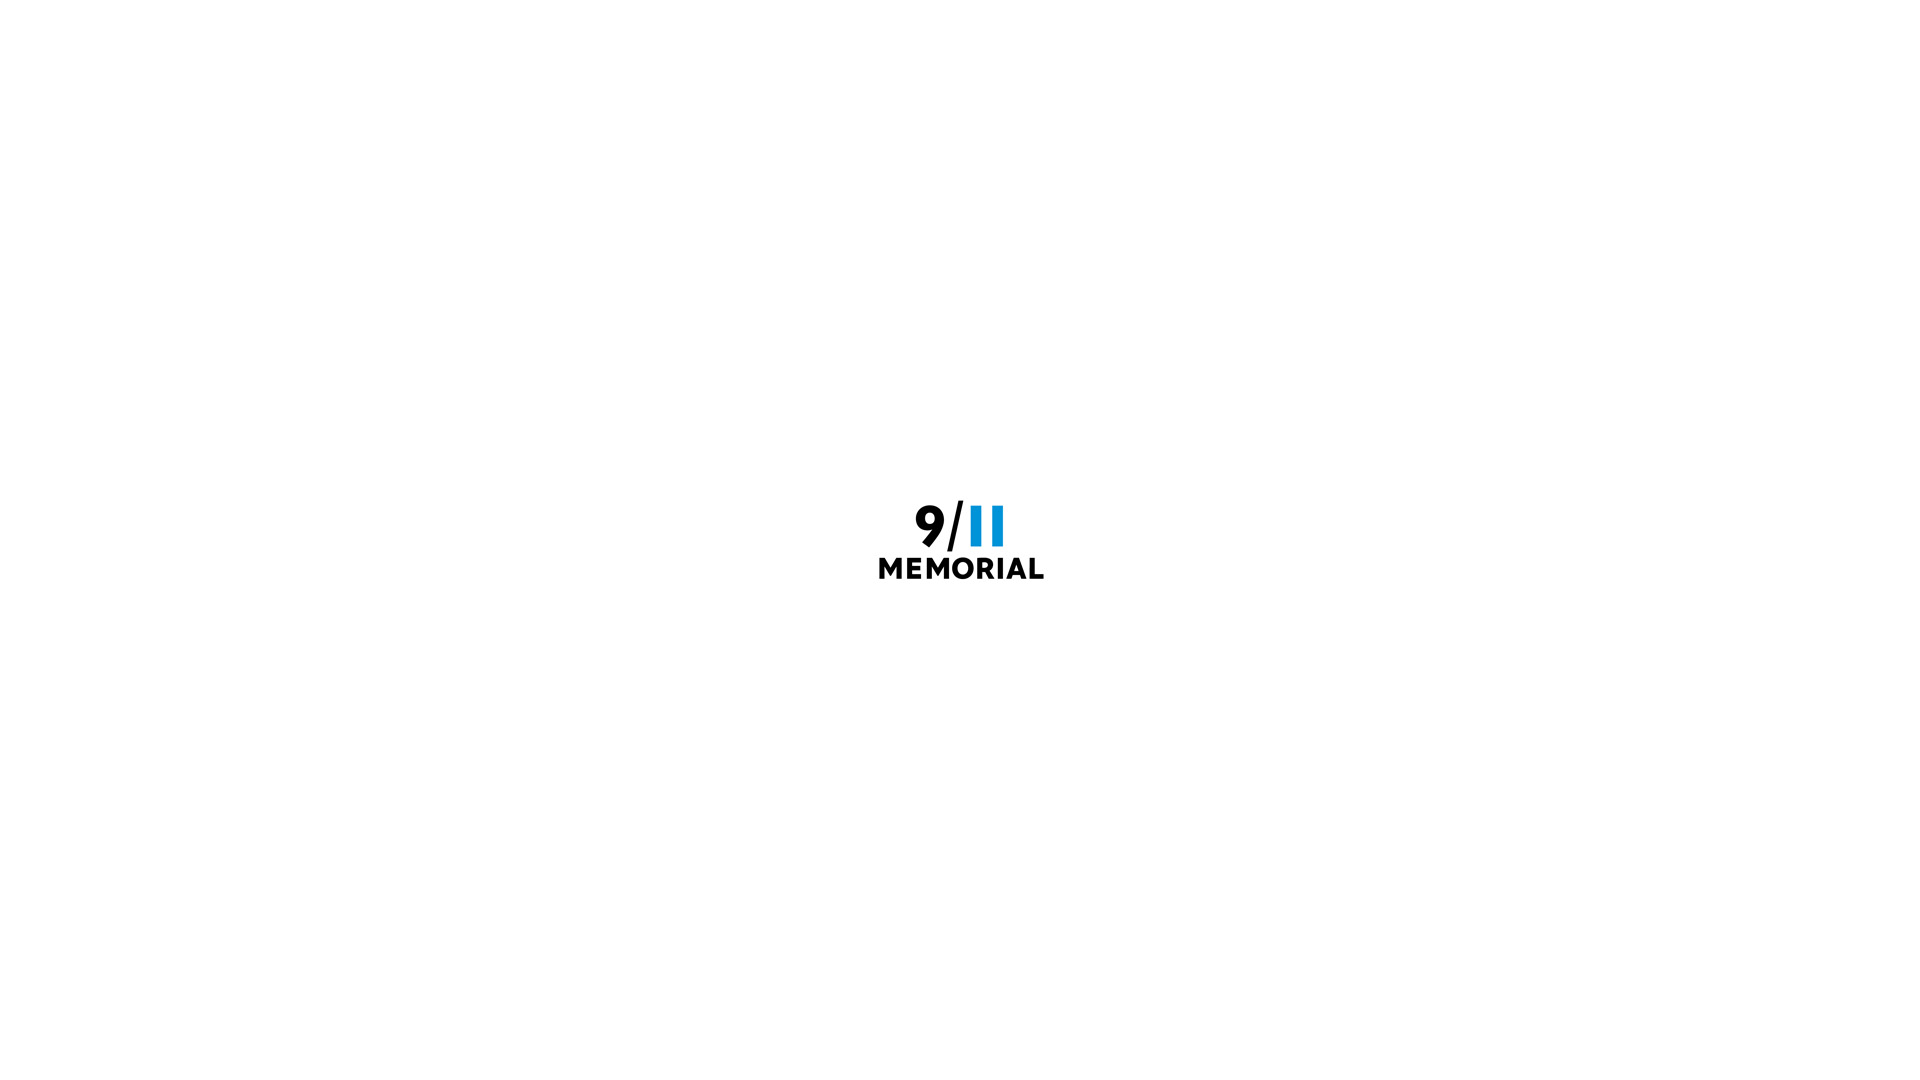 9/11 Memorial logo on white background 